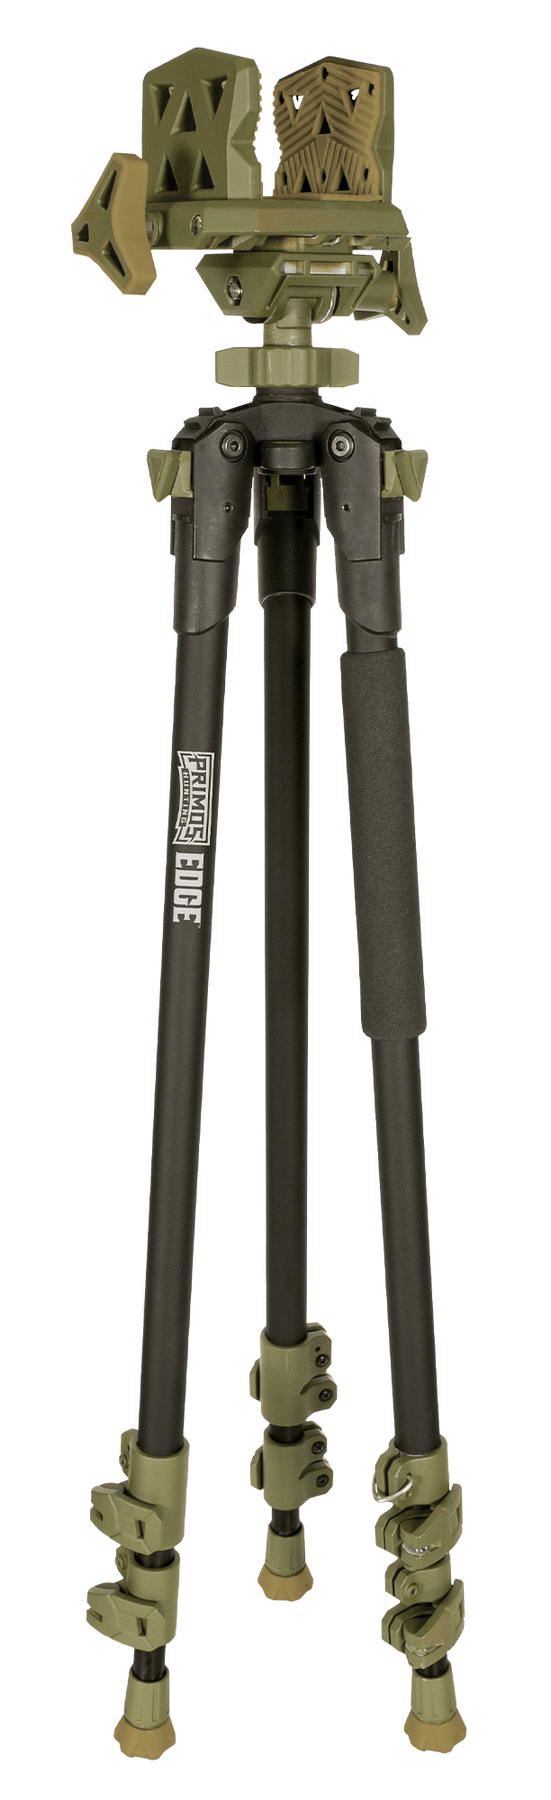 Buy Trigger Stick Apex Carbon Fiber Tripod - Primos Hunting